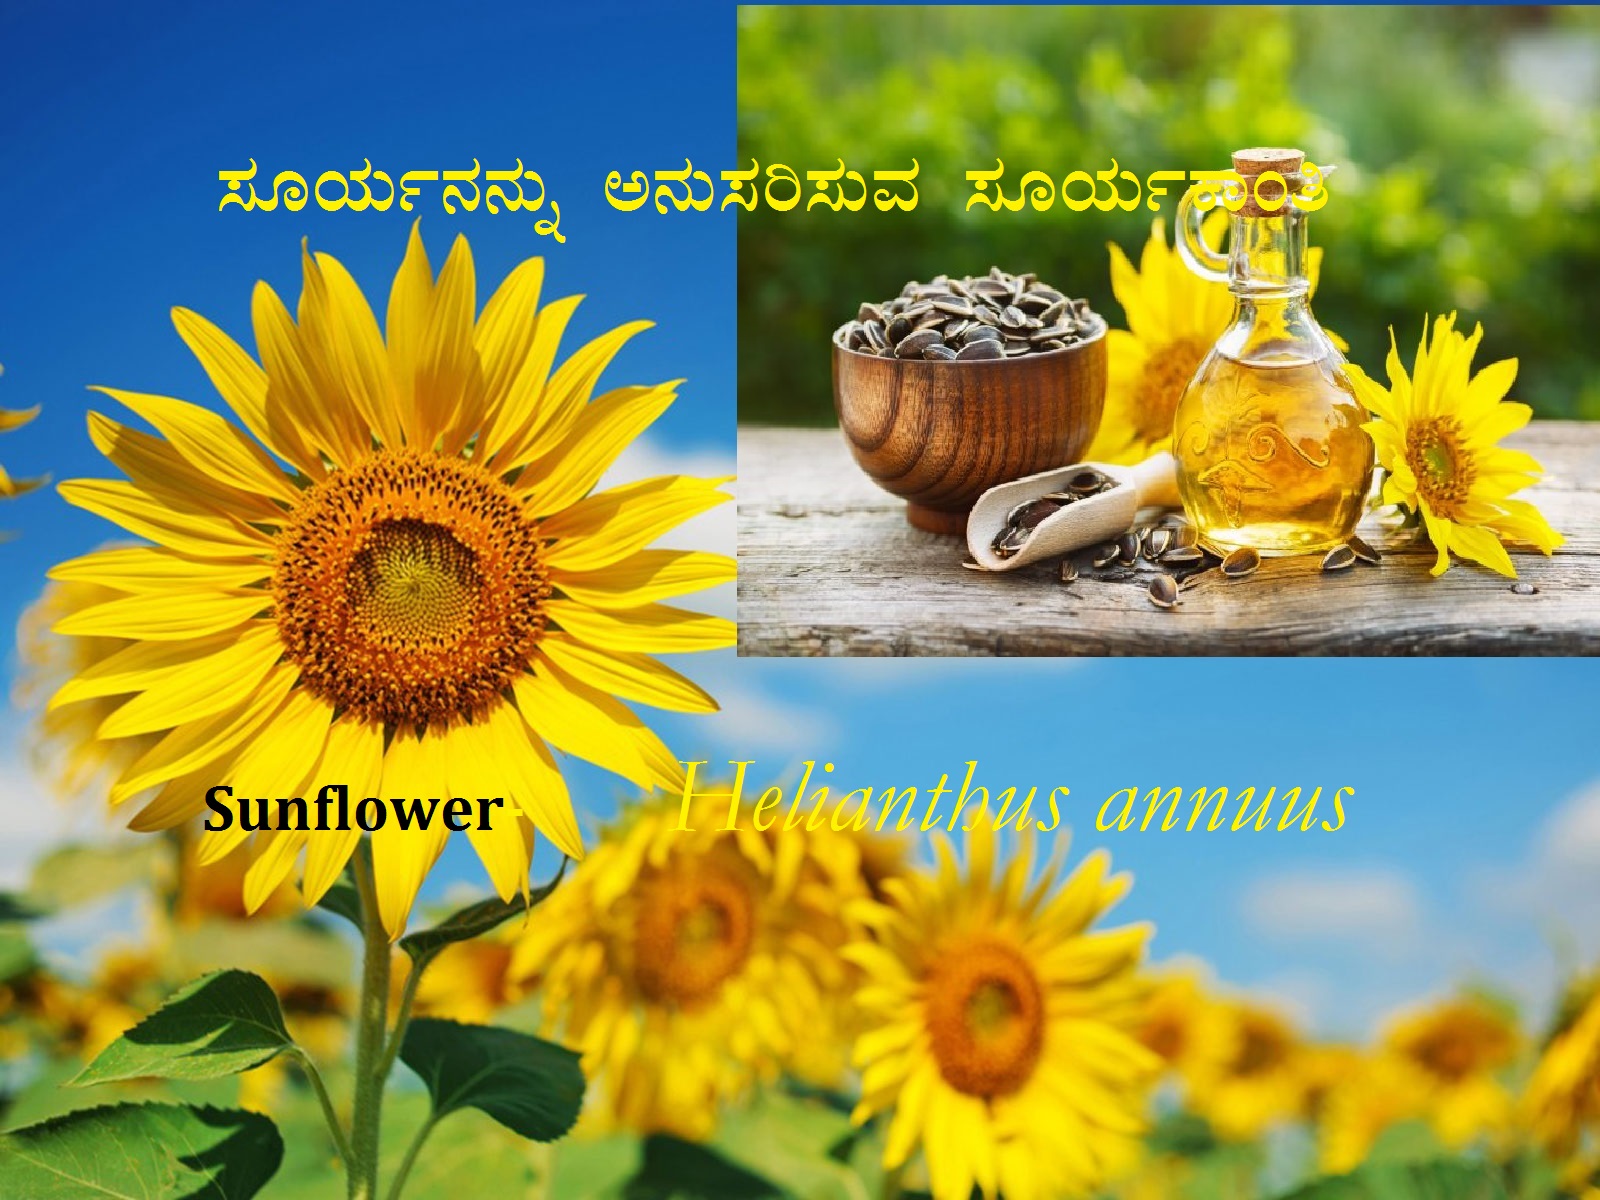 You are currently viewing ಸೂರ್ಯನನ್ನು ಅನುಸರಿಸುವ ಸೂರ್ಯಕಾಂತಿ: Sunflower- Helianthus annuus